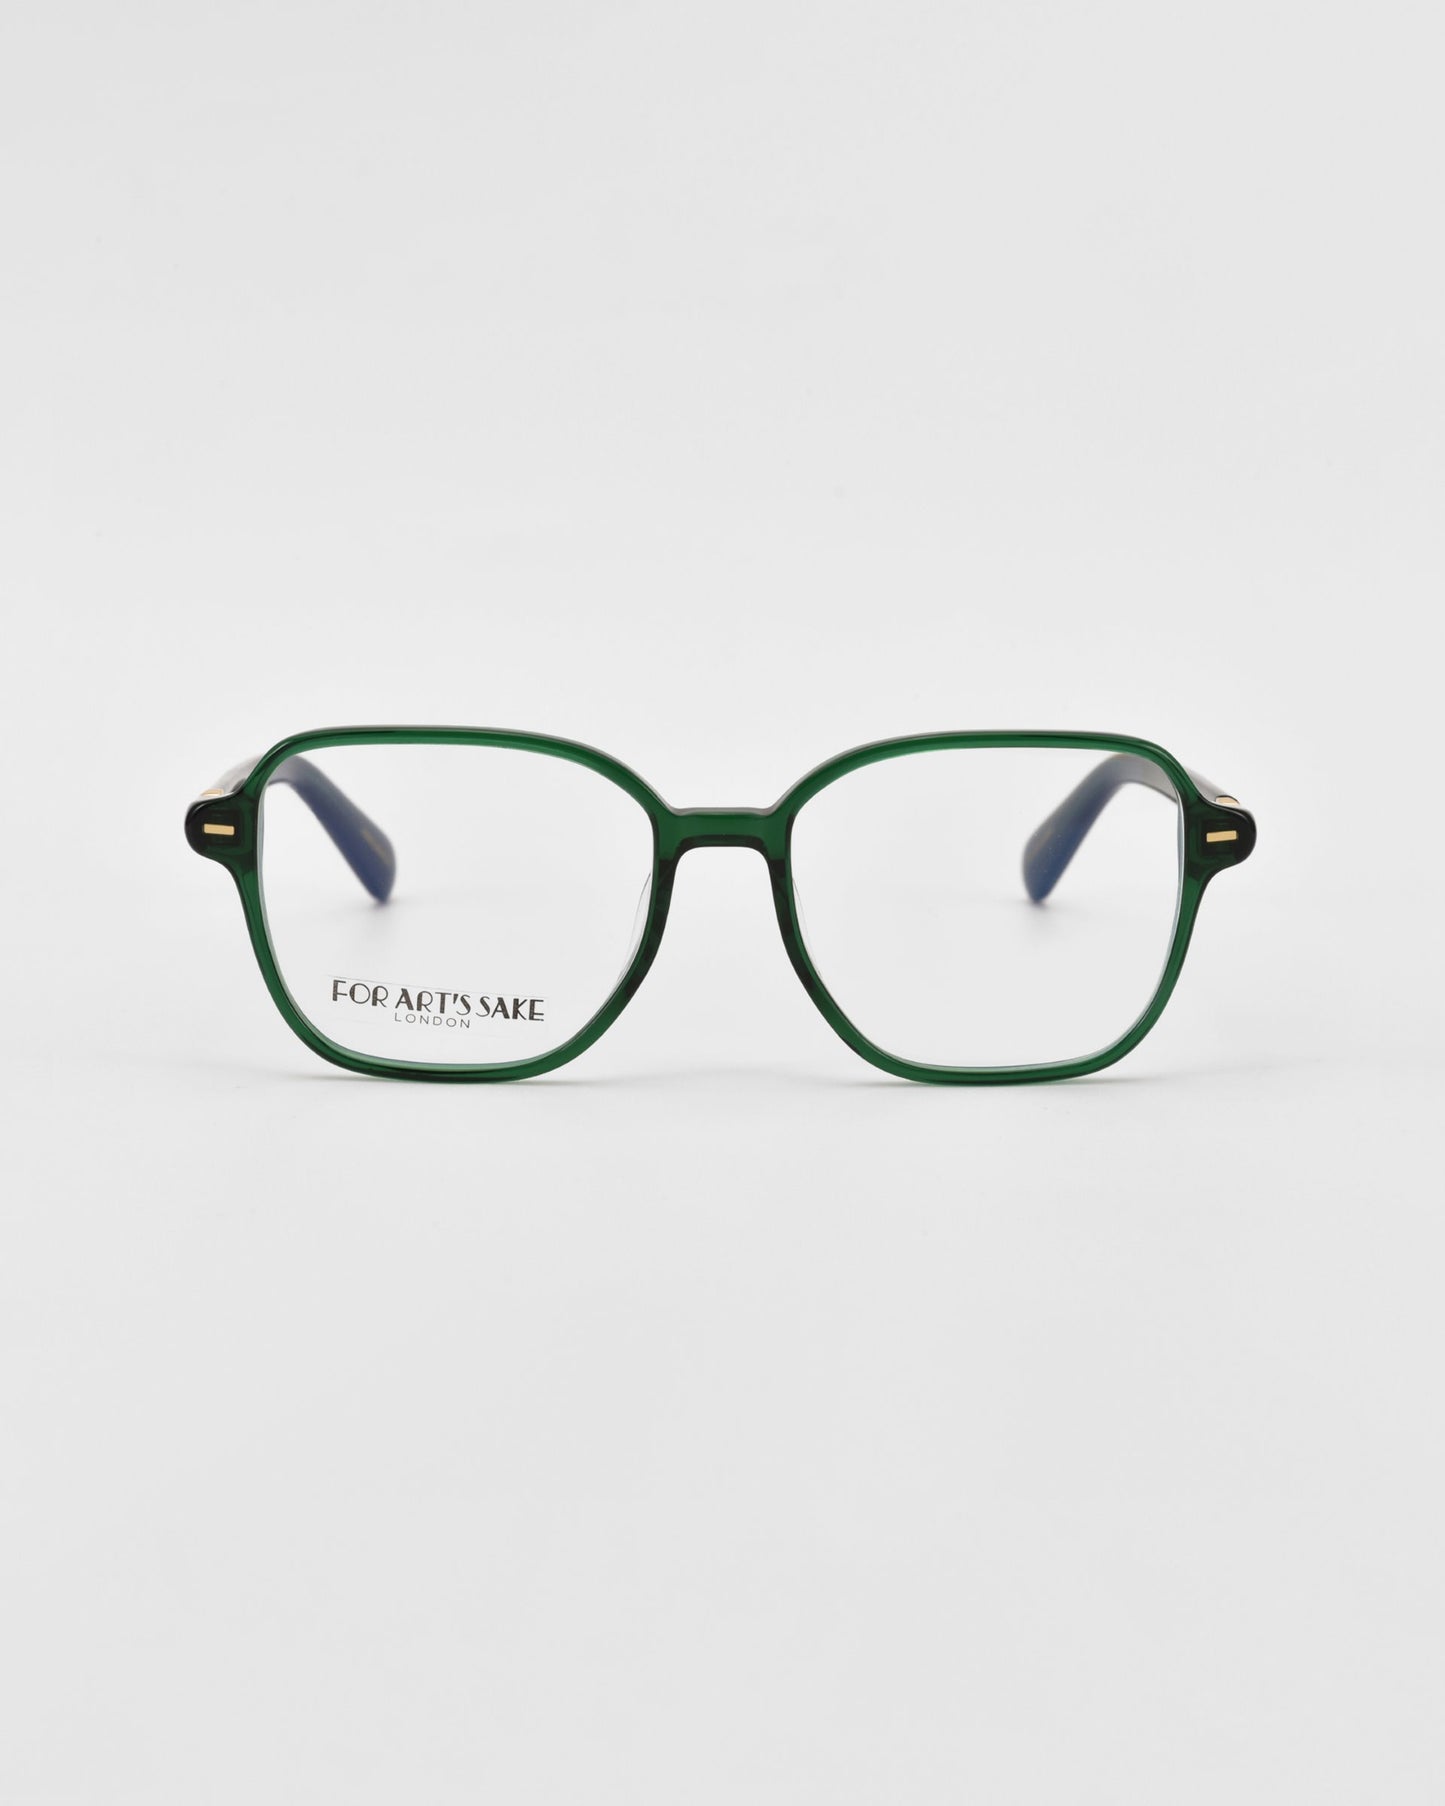 Green cat-eye optical glasses on a white background.